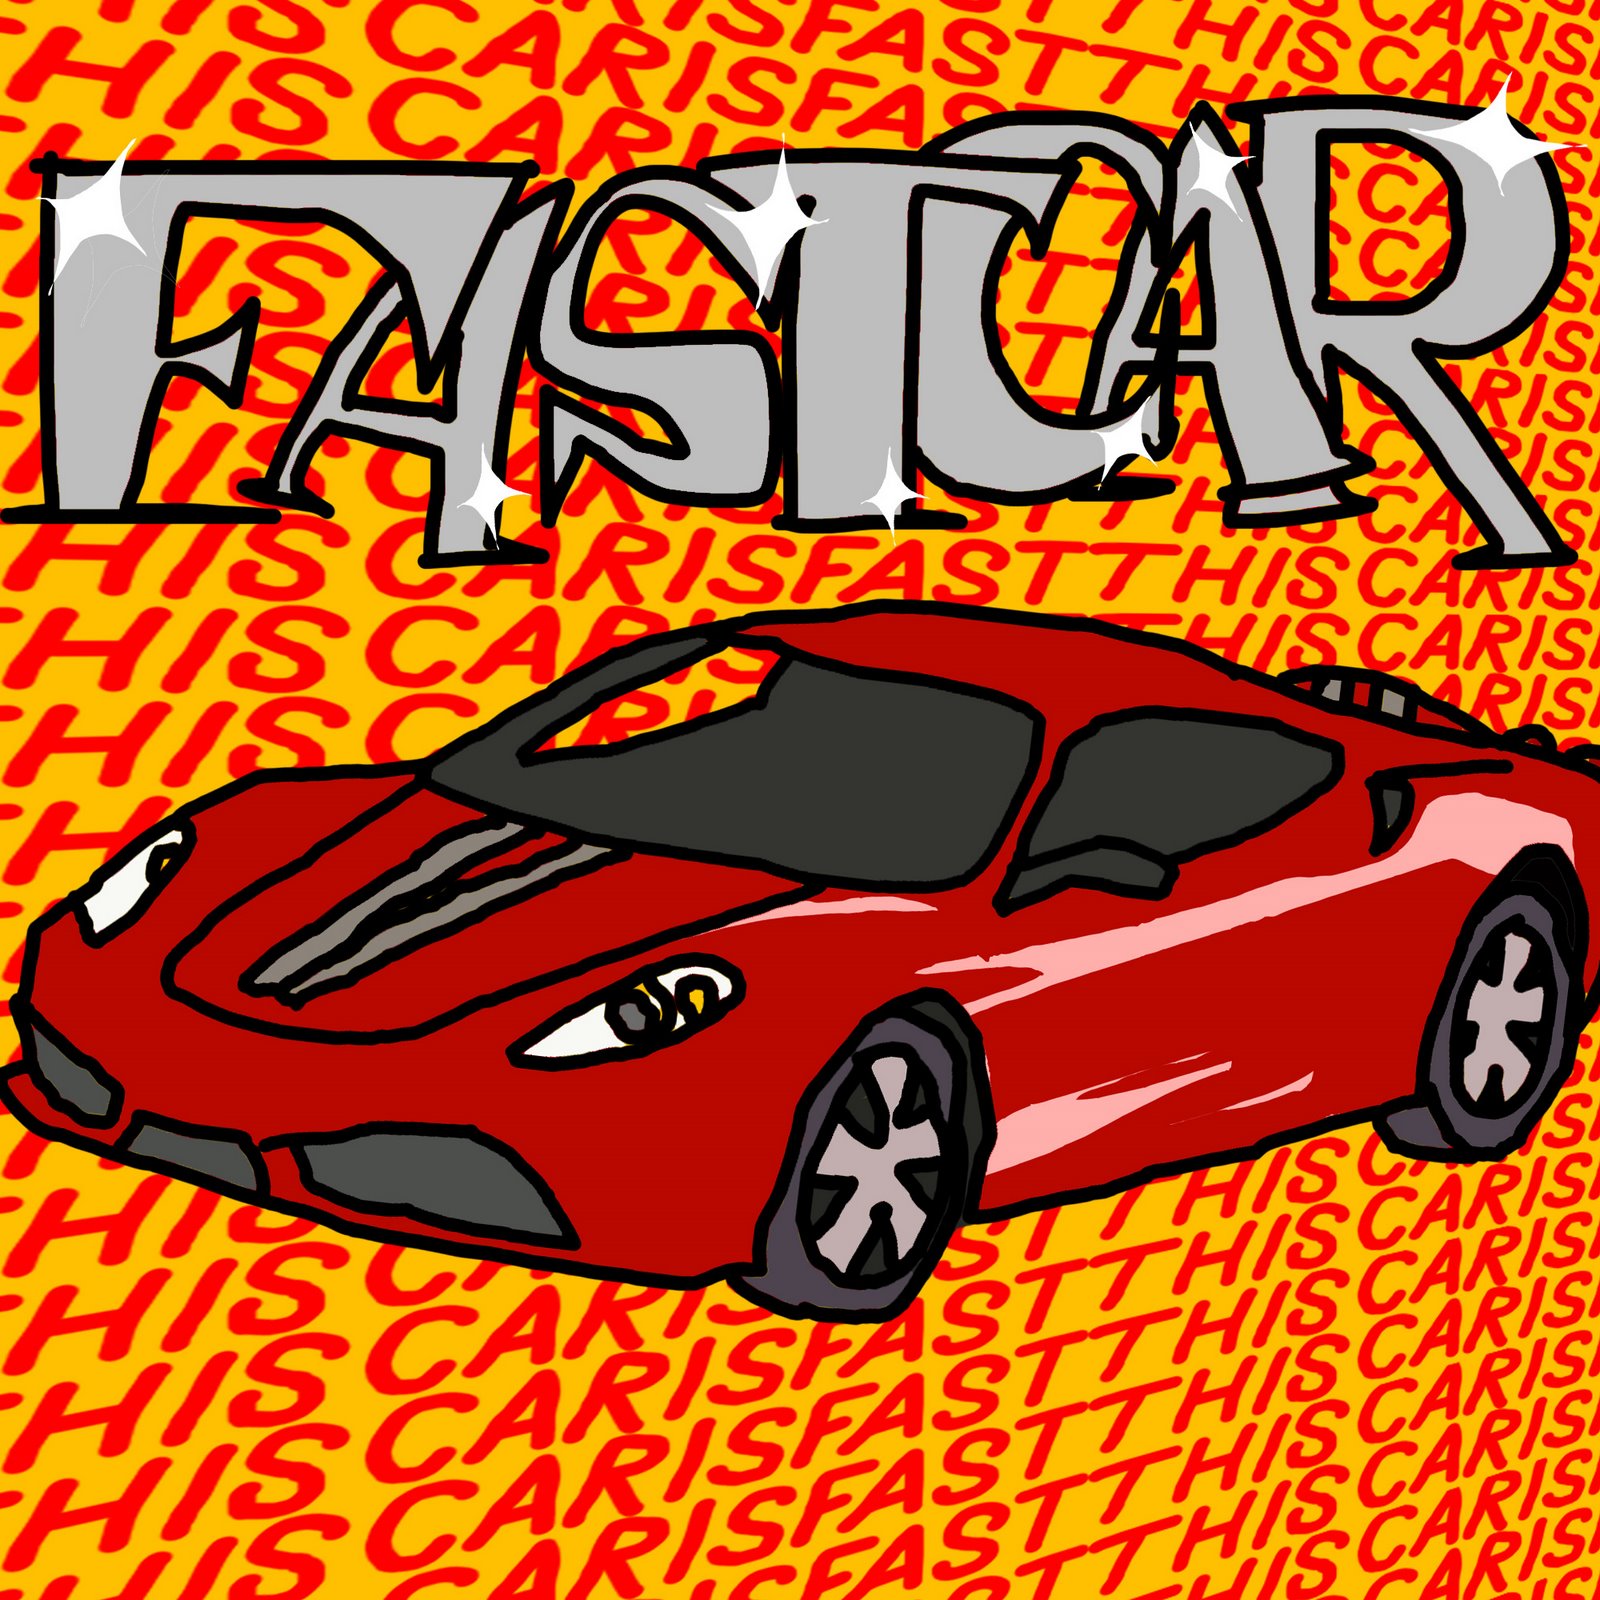 [fastcar.jpg]